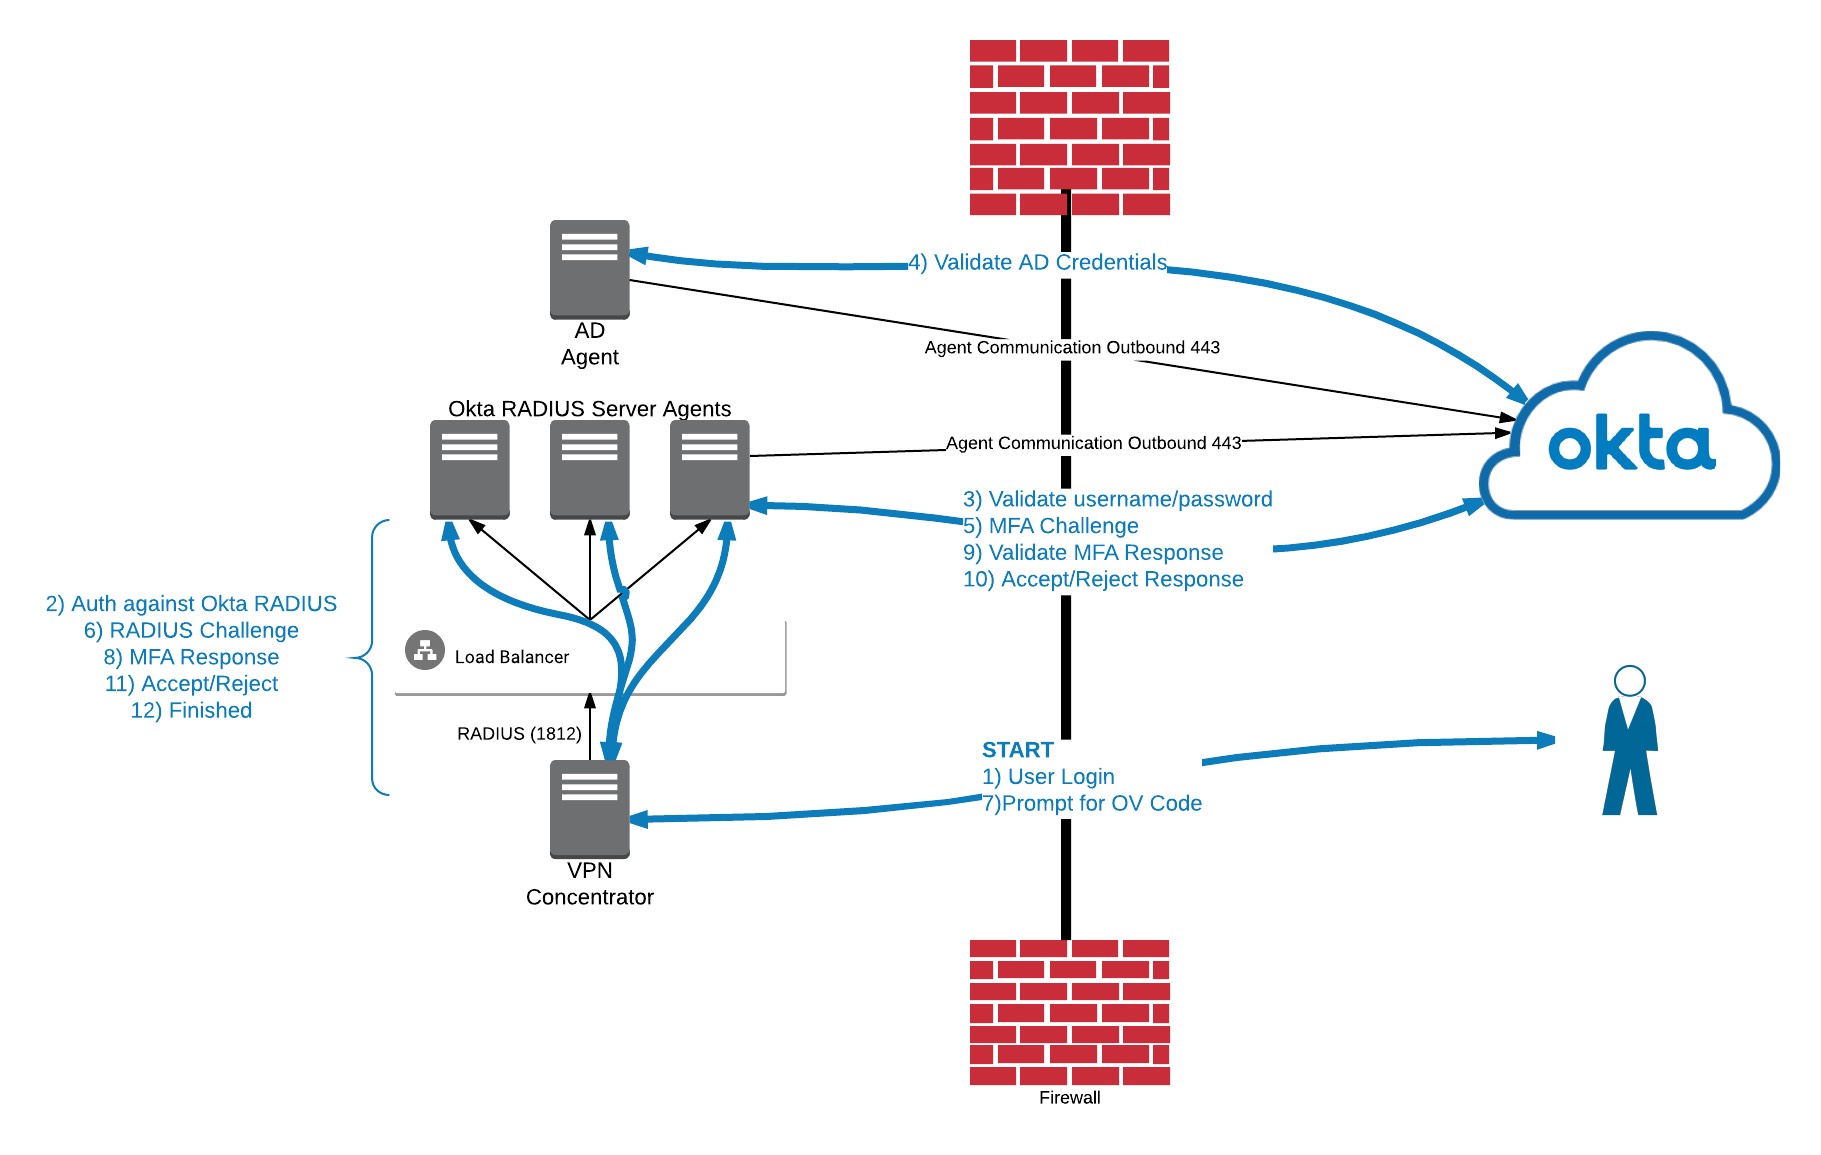 Diagram of the Okta RADIUS server architecture and flow.